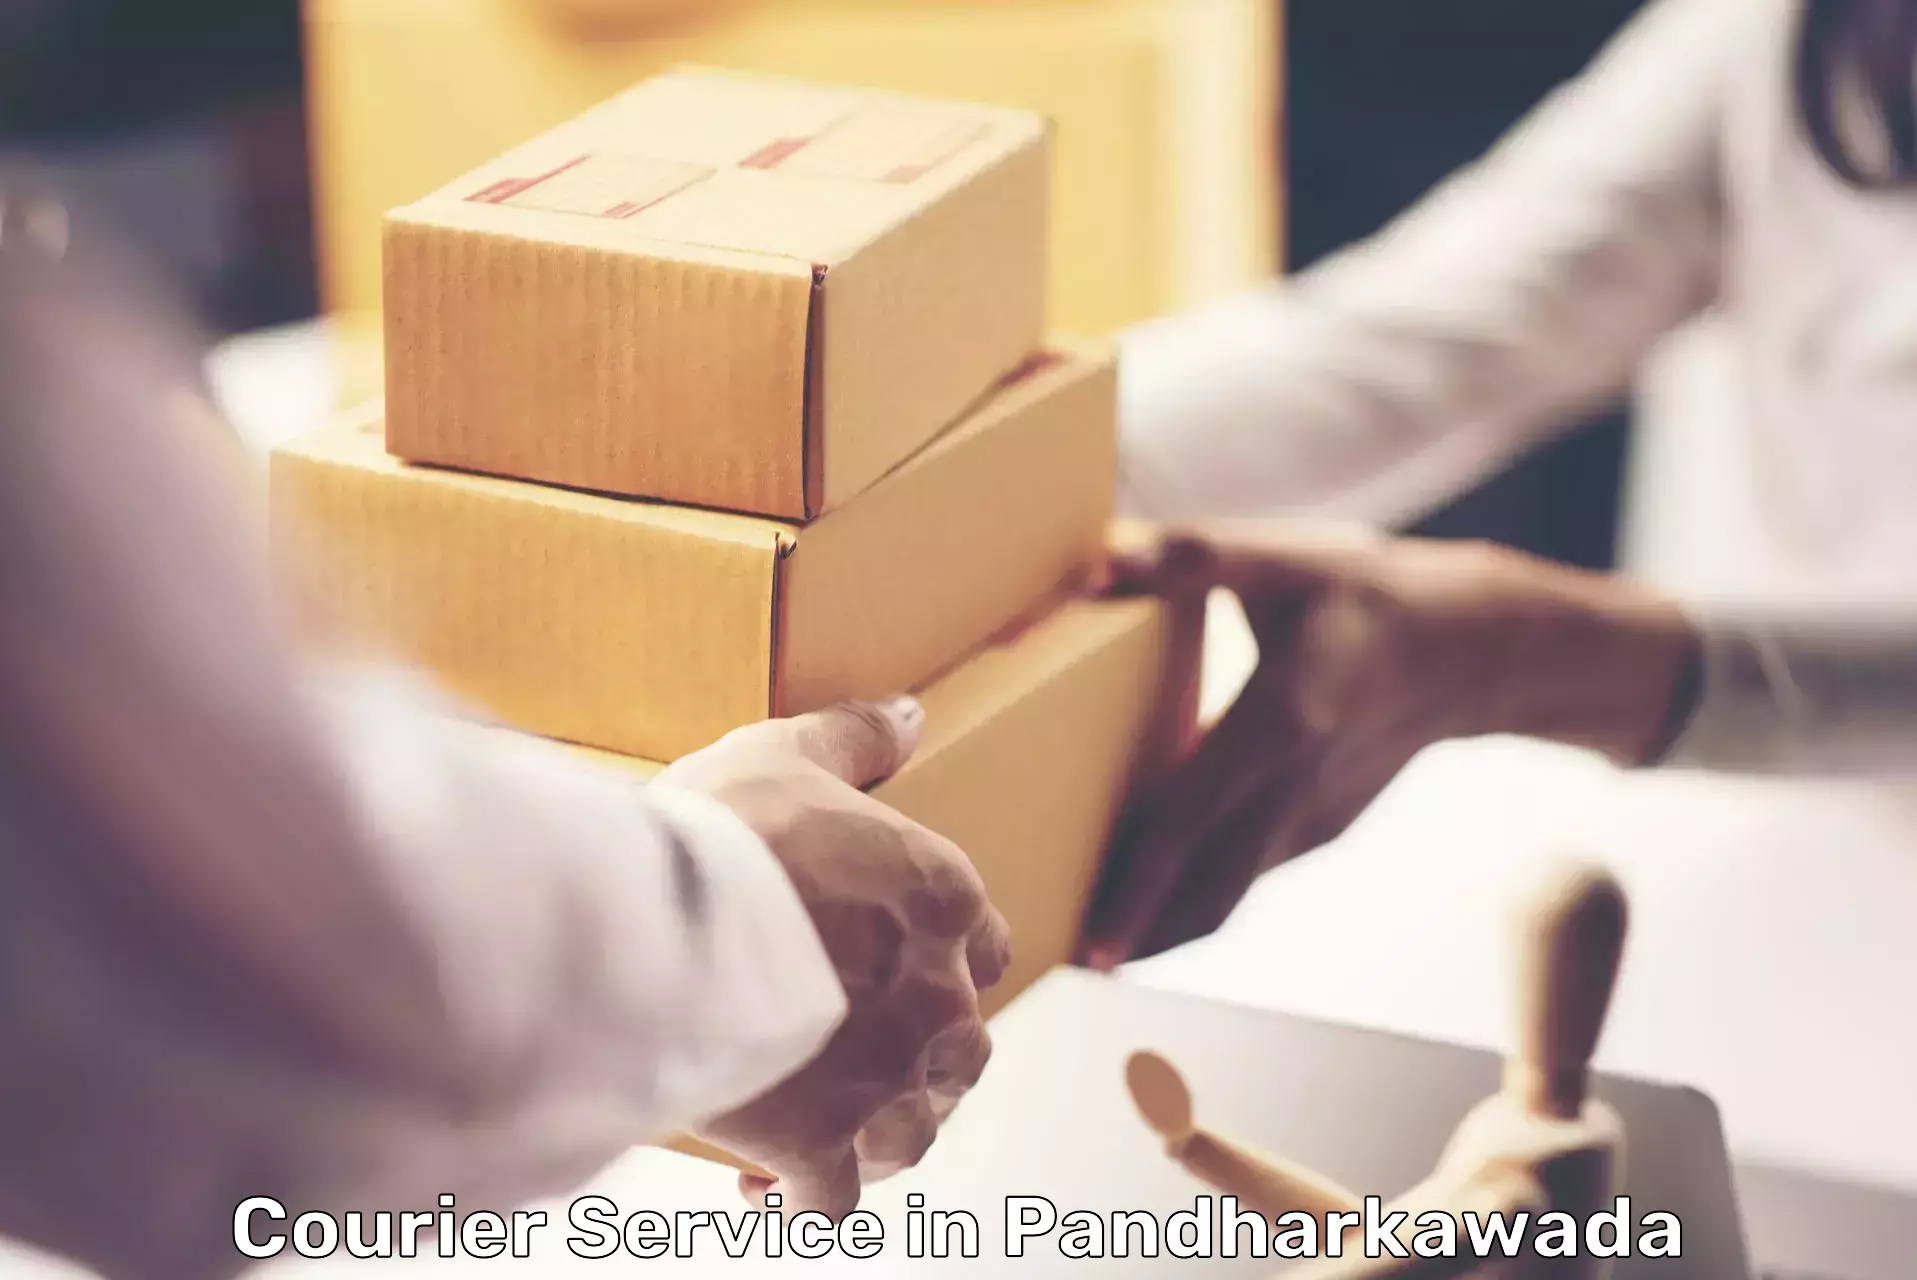 Fast shipping solutions in Pandharkawada